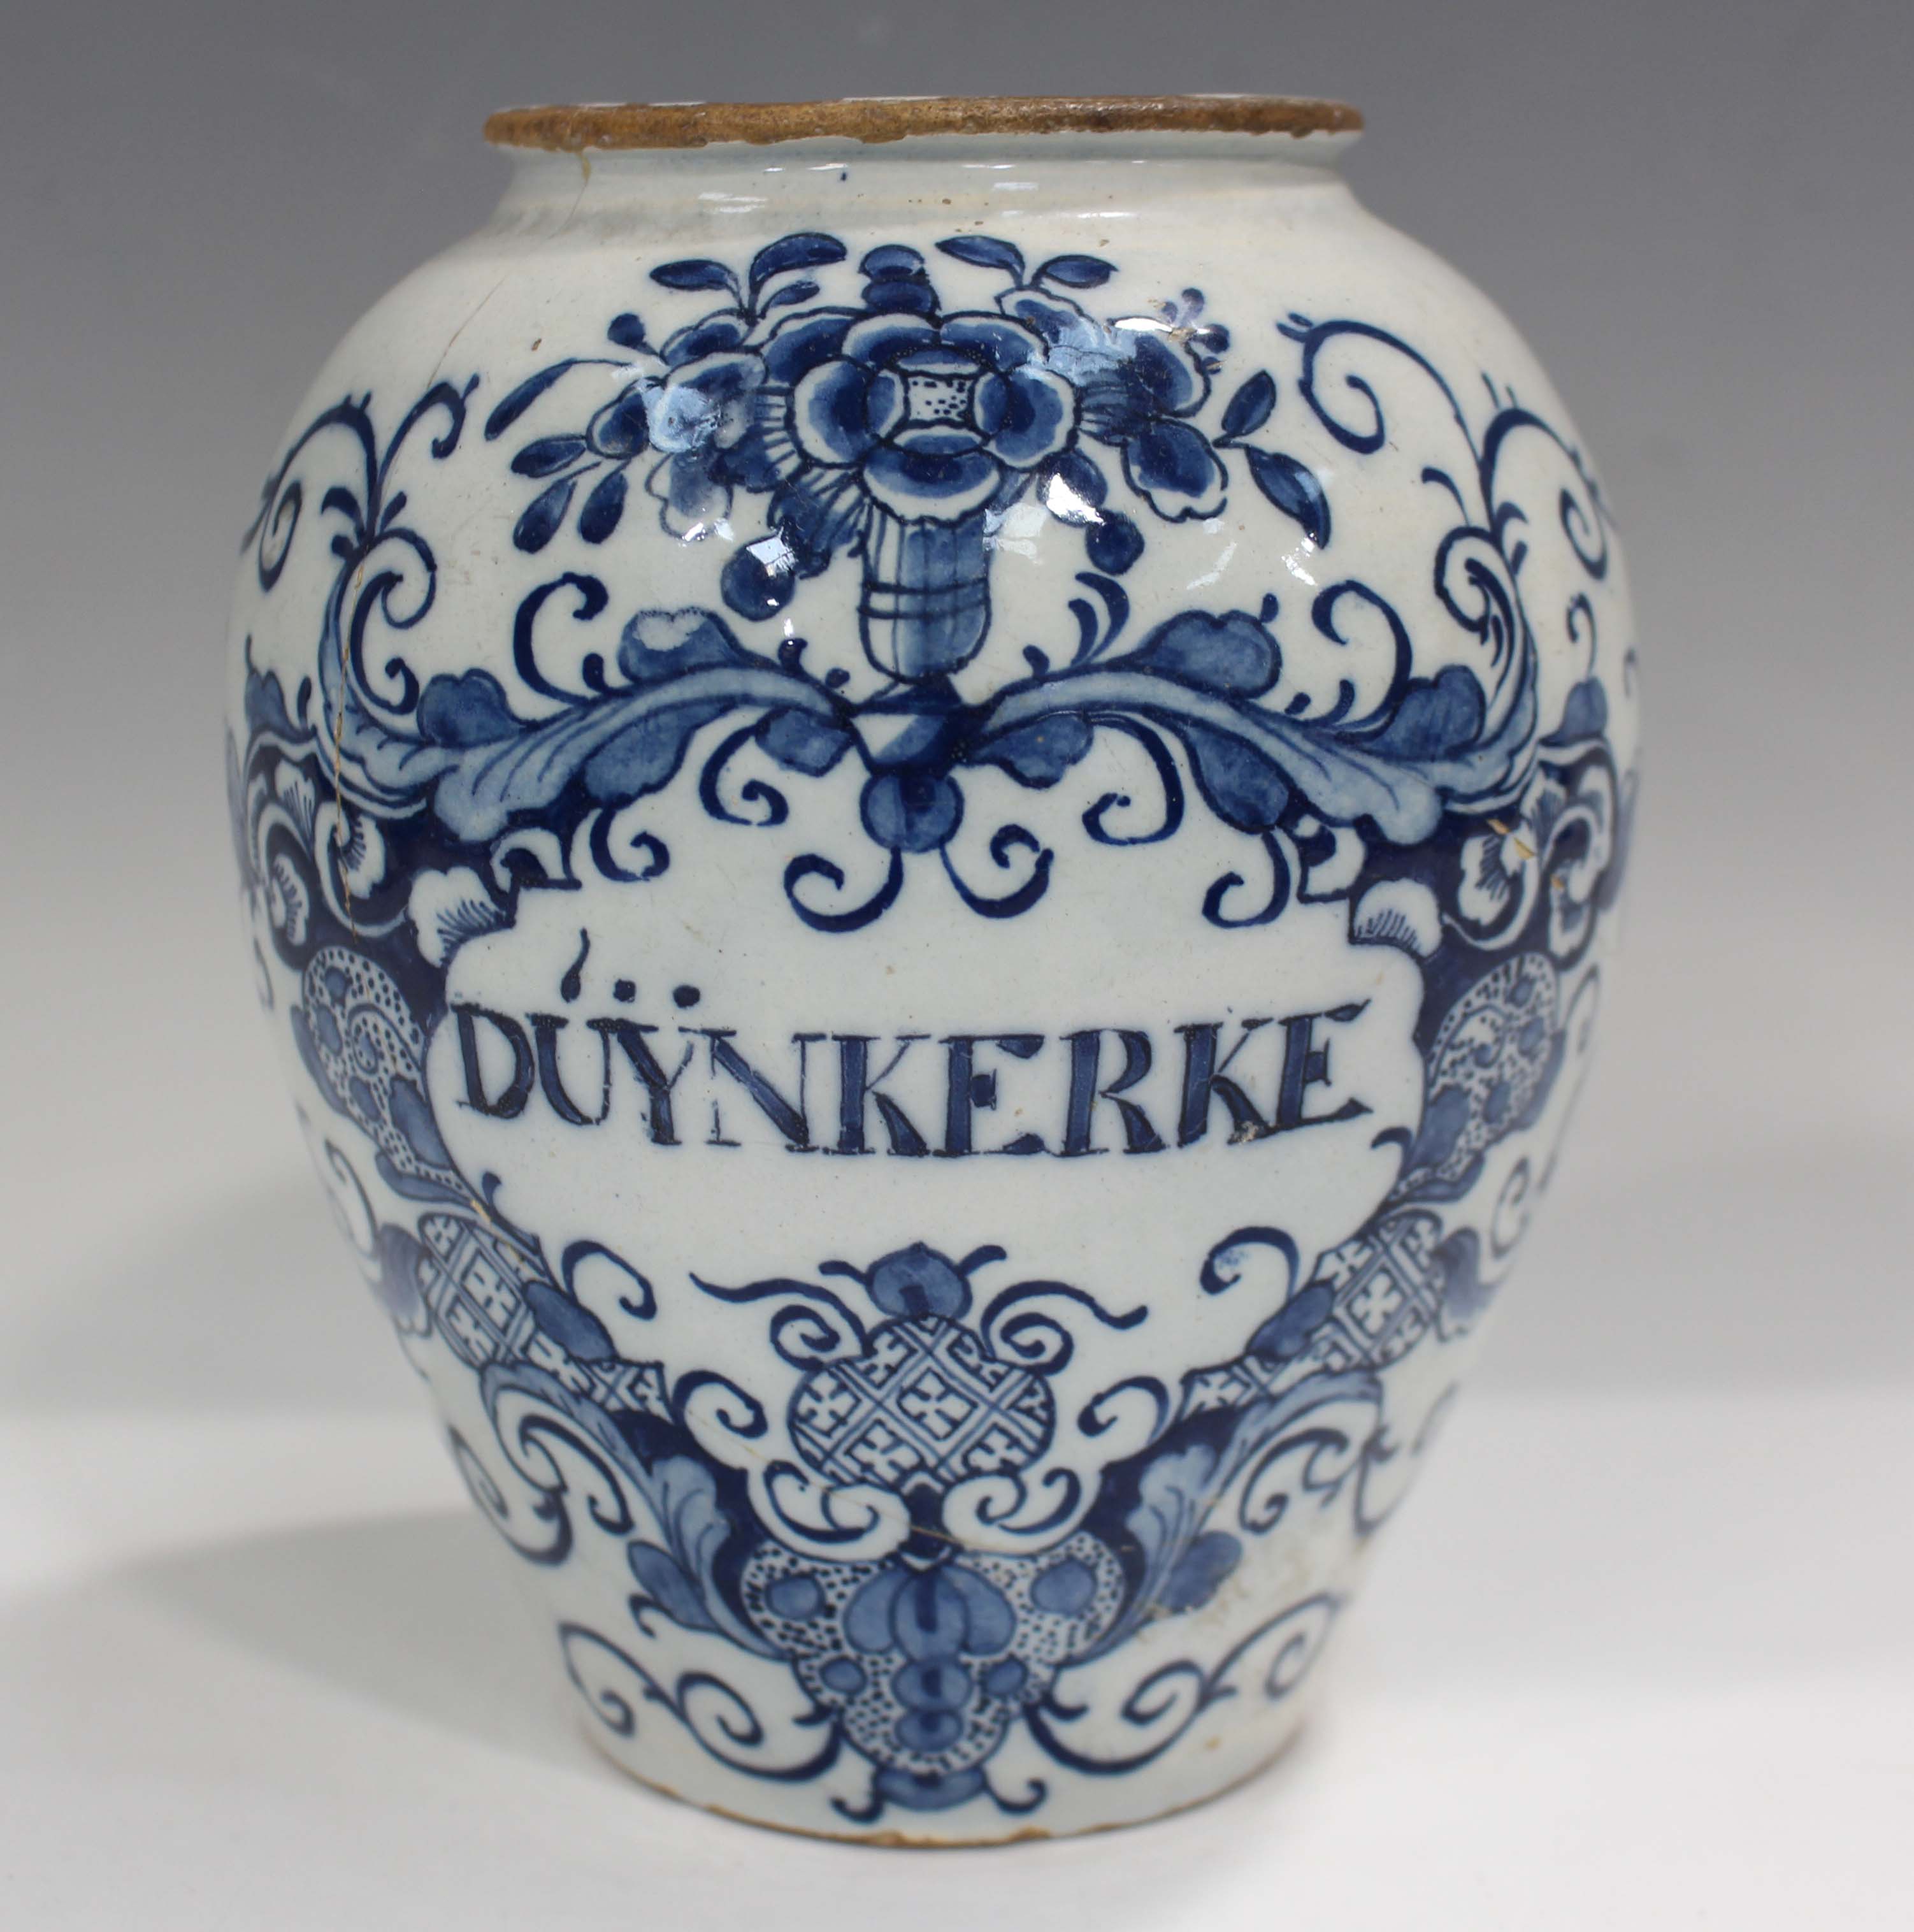 A Dutch Delft blue and white tobacco jar, mid 18th century, by Pieter van den Briel, of high-